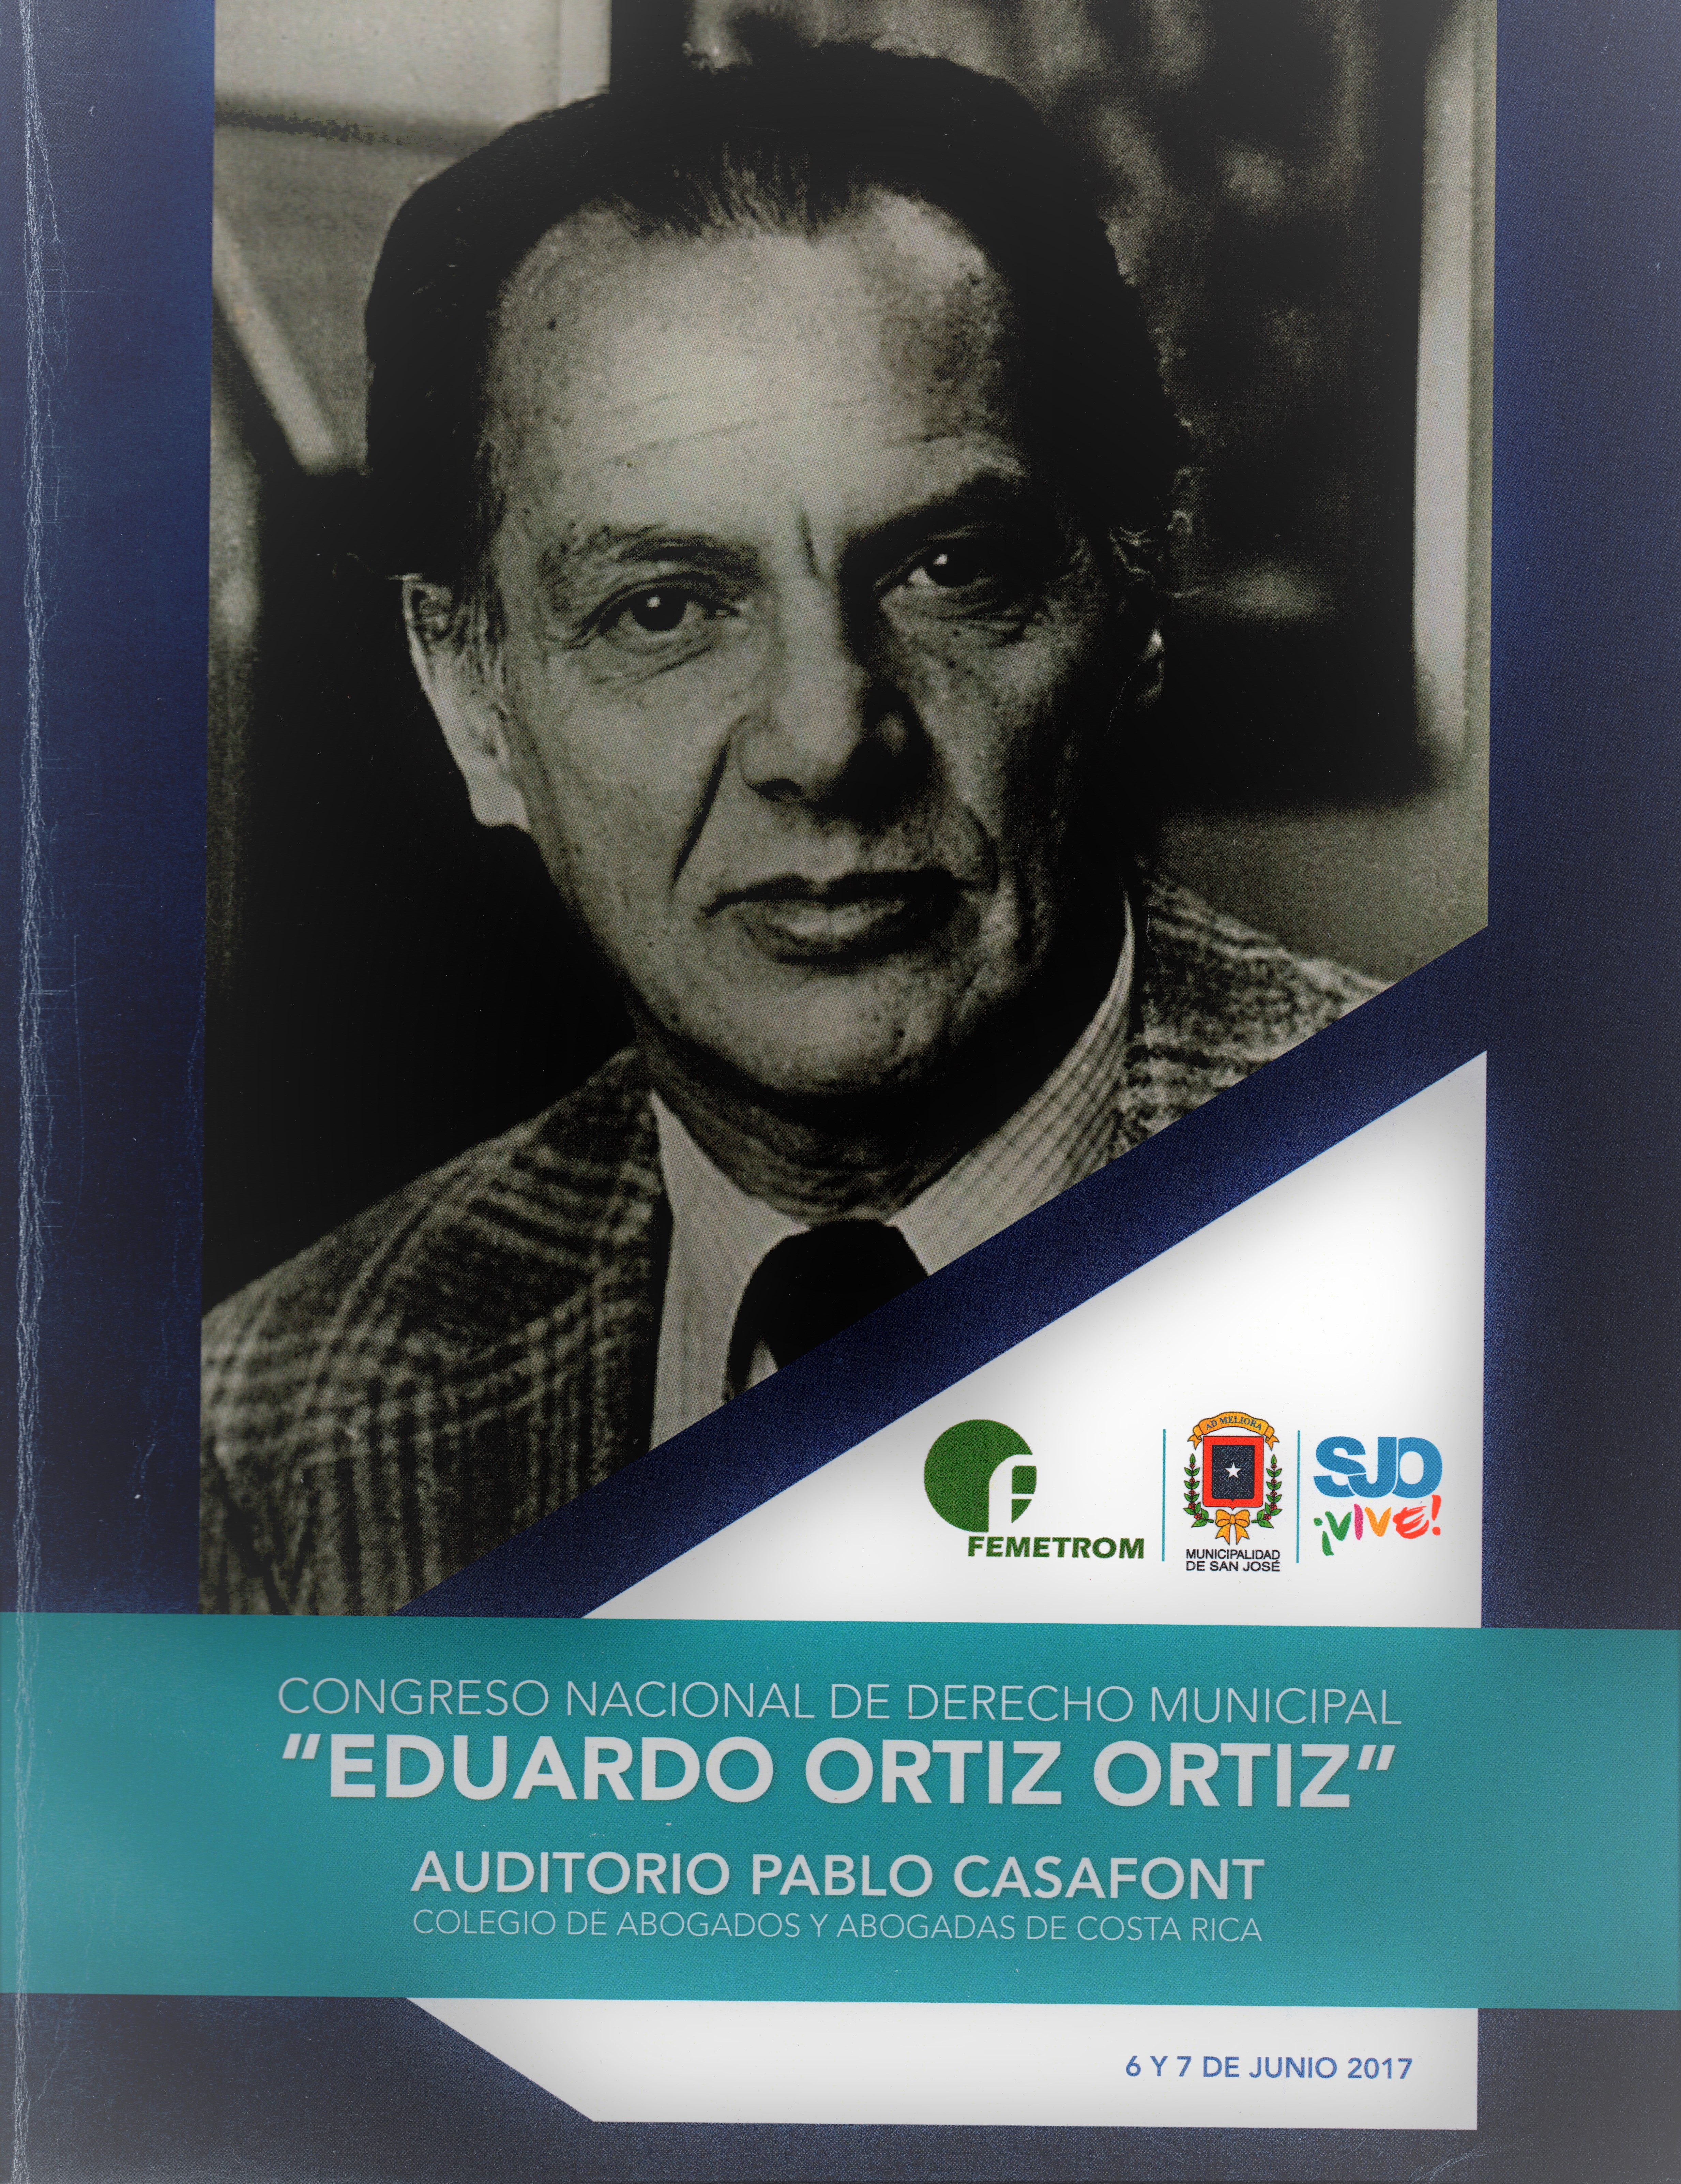 Congreso Nacional de Derecho Municipal "Eduardo Ortiz Ortiz"